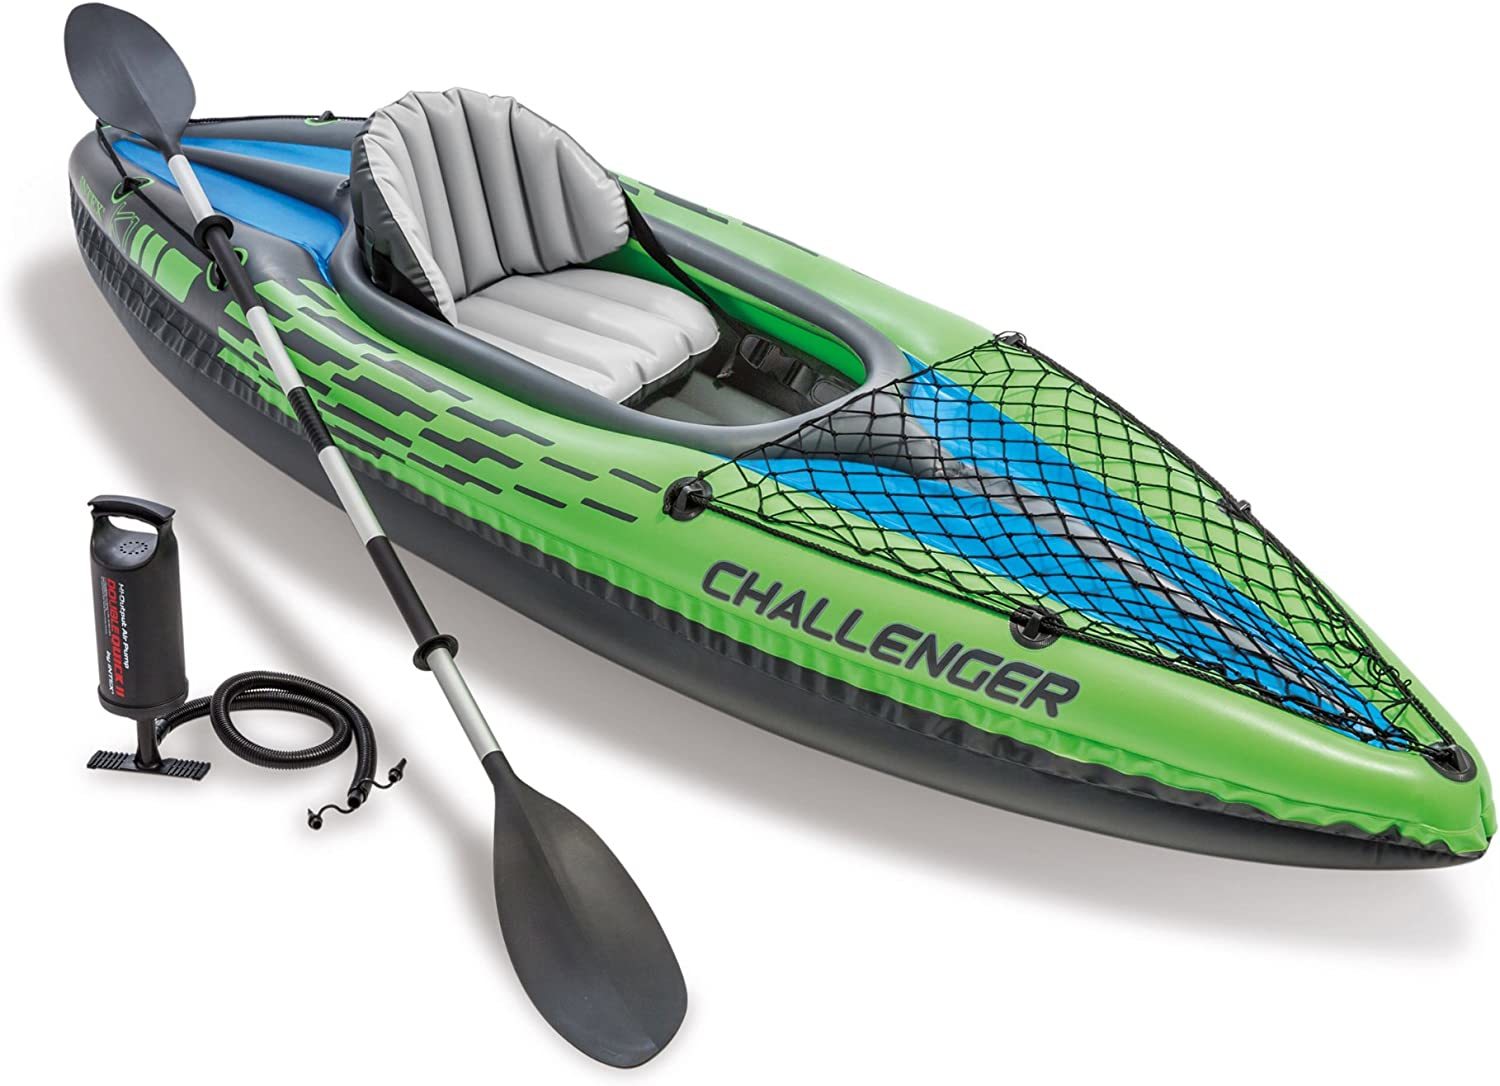 Intex Challenger Kayak, Inflatable Kayak Set With Aluminum Oars And High, Pump - $113.99